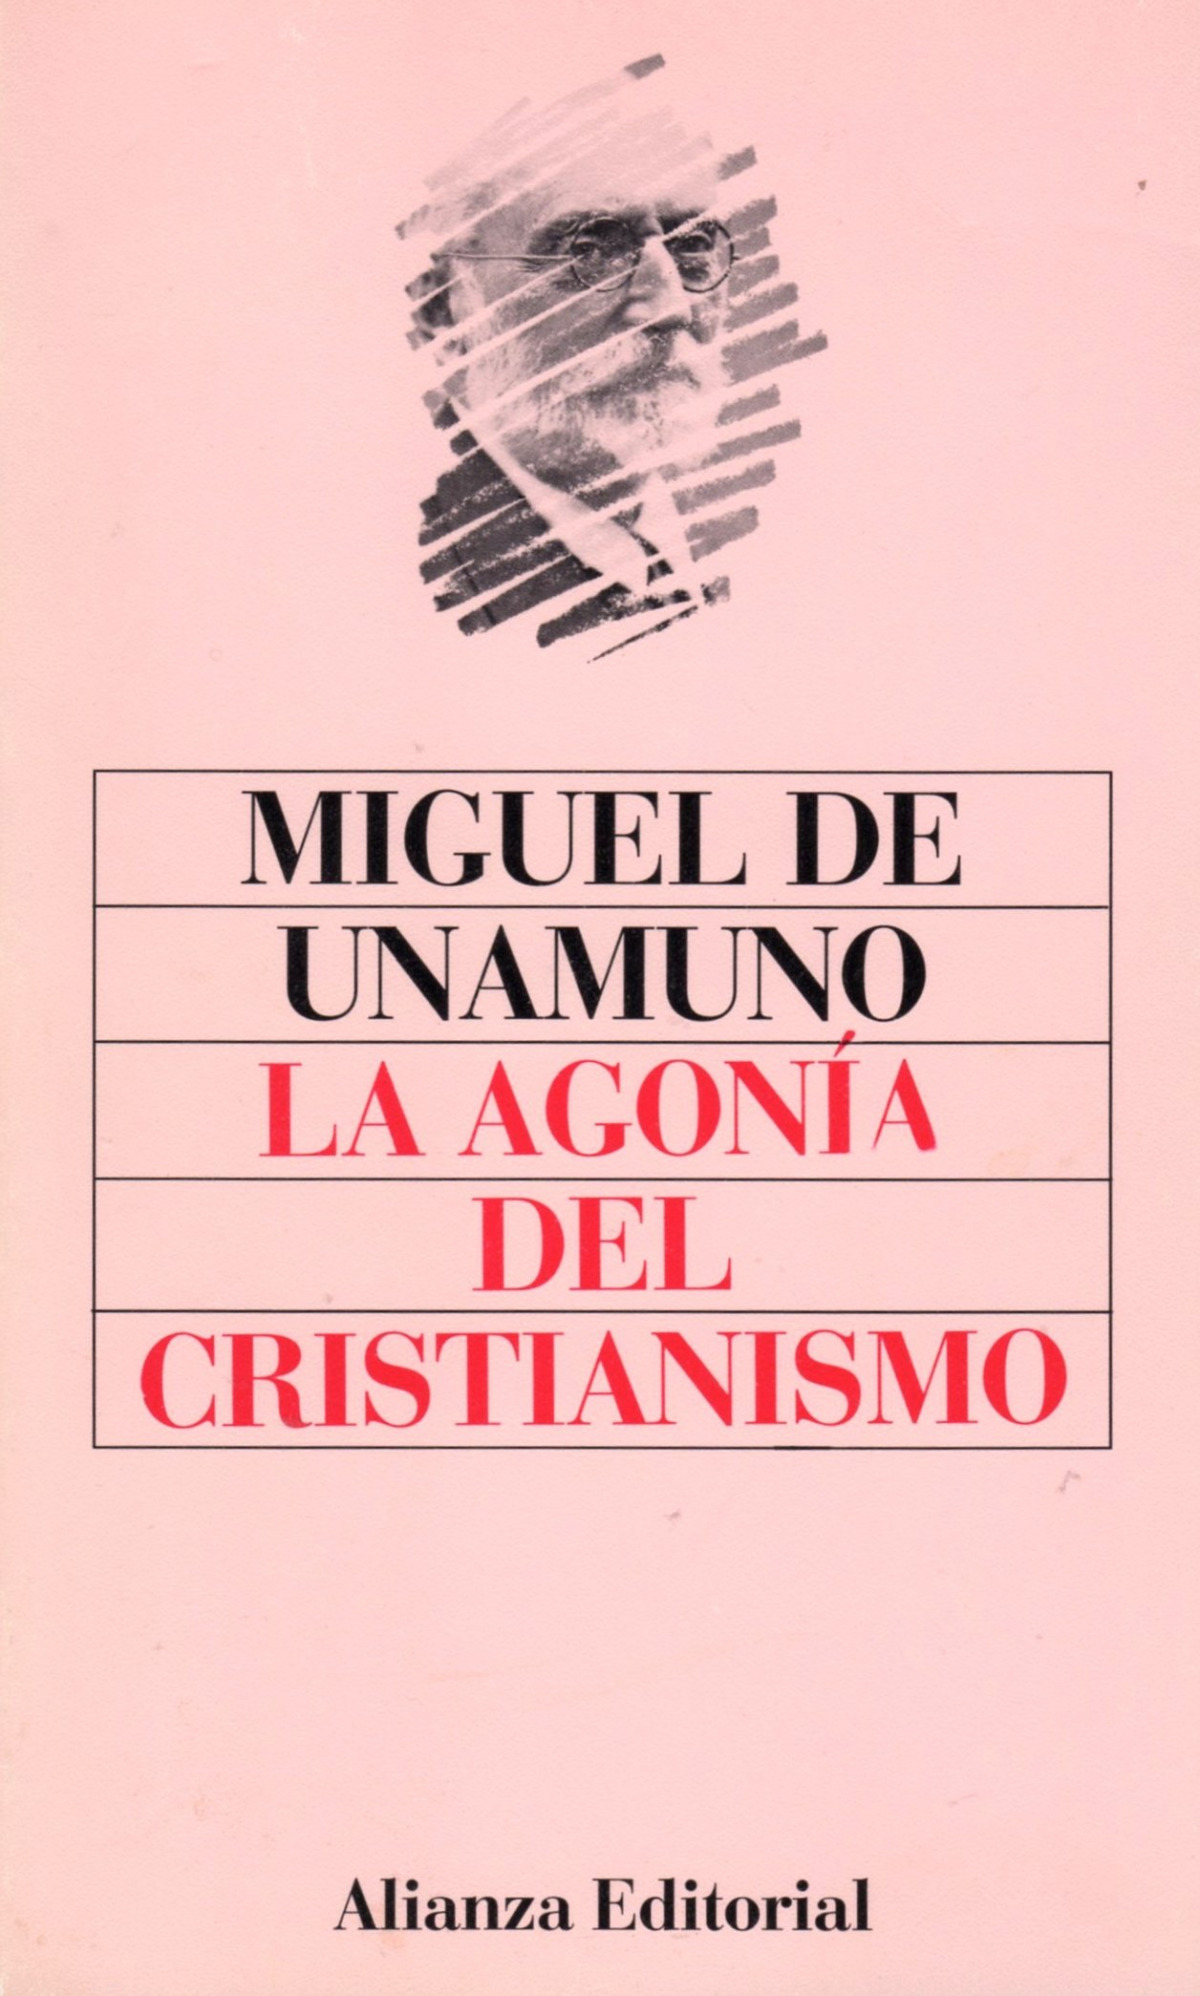 La agonia del cristianismo - Unamuno, Miguel De